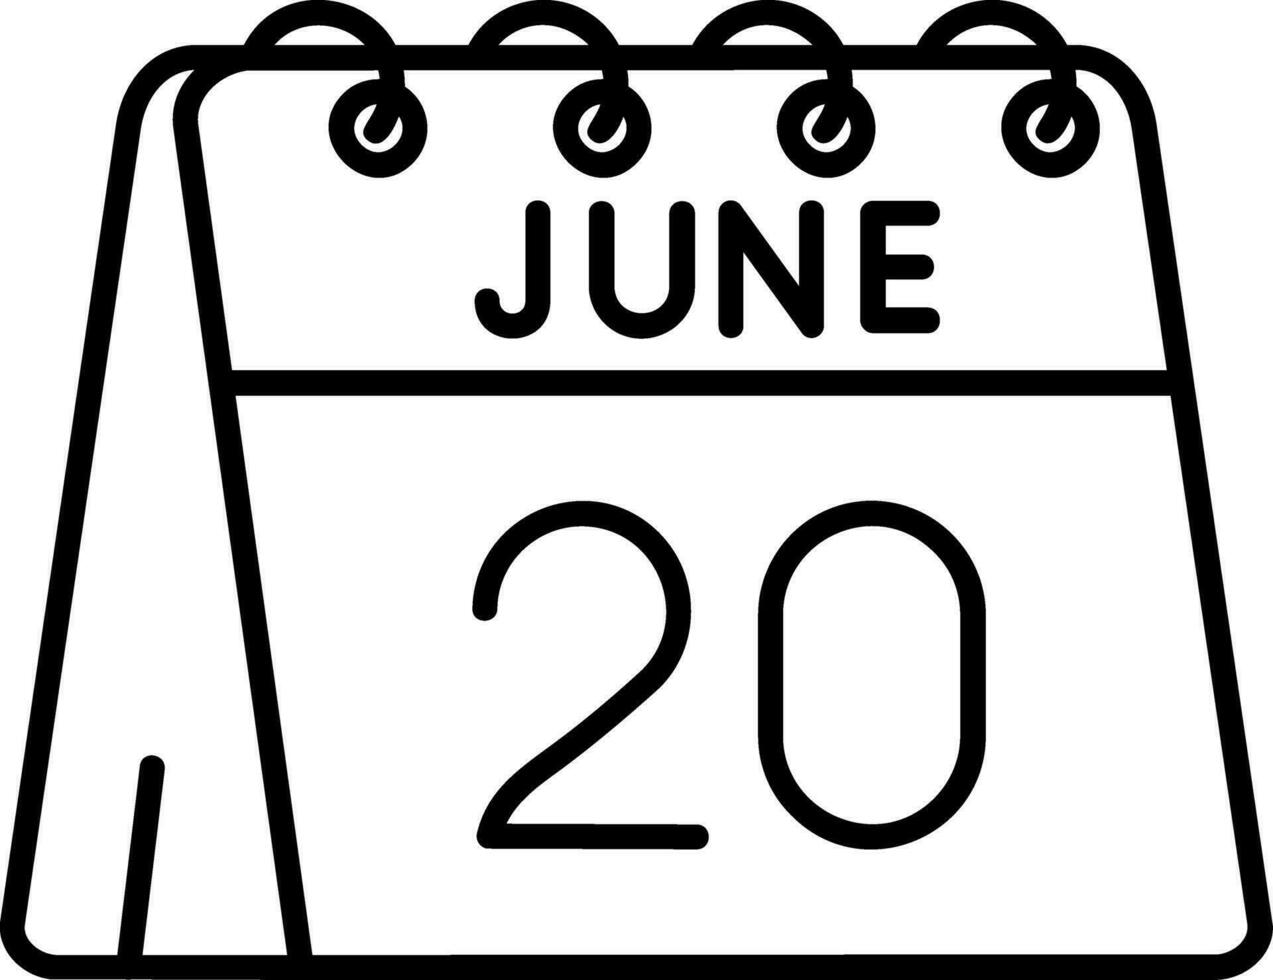 20:e av juni linje ikon vektor